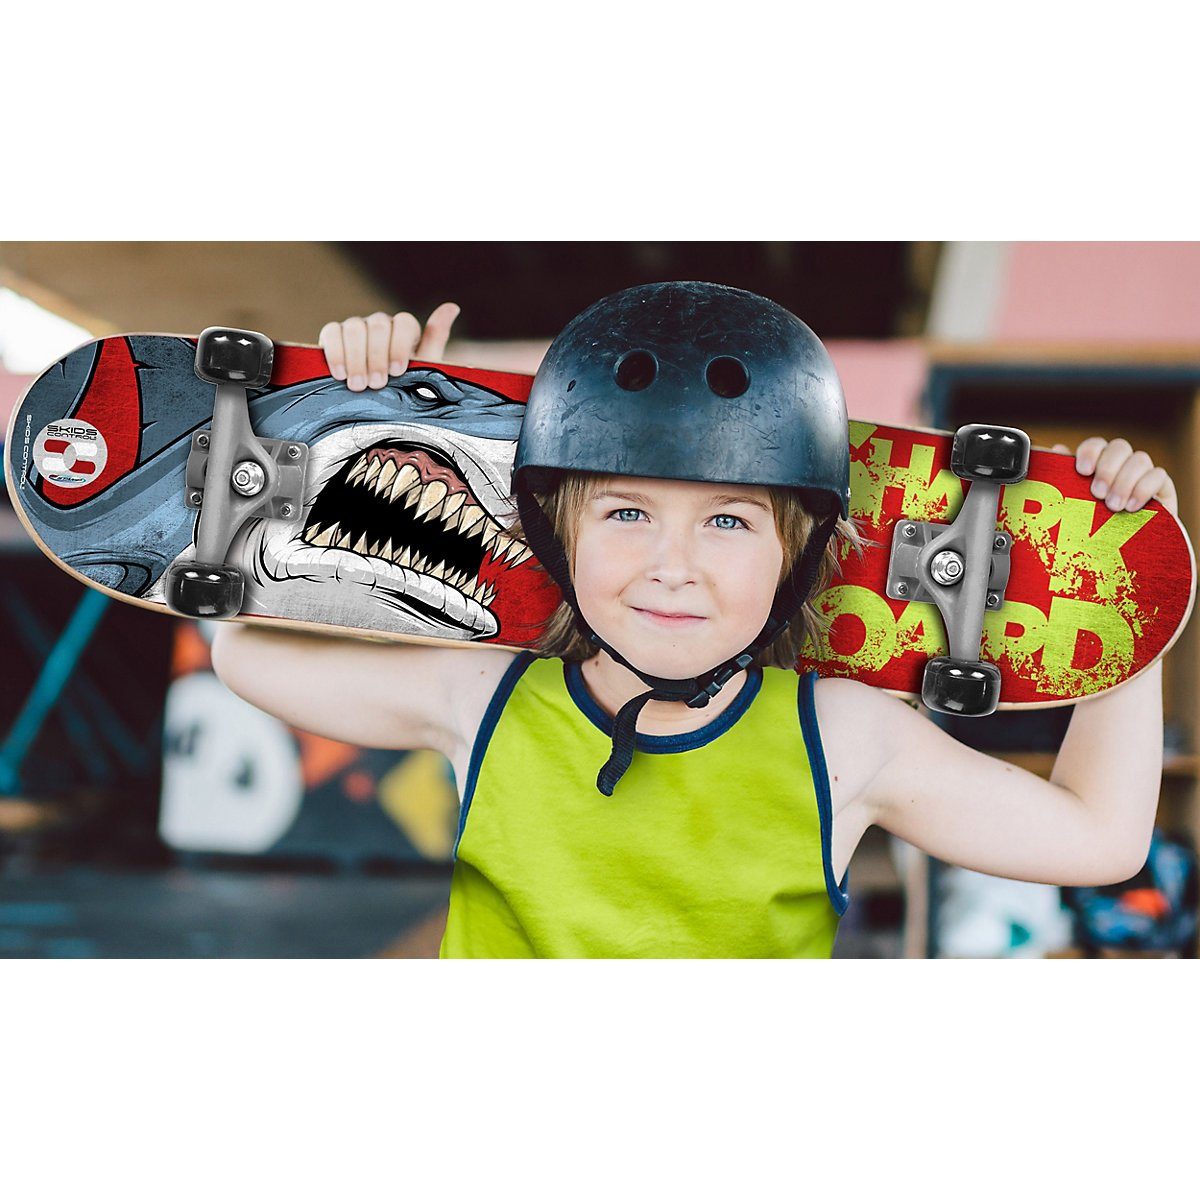 Sport Skateausrüstung STAMP Skateboard Skateboard 28x8 Shark